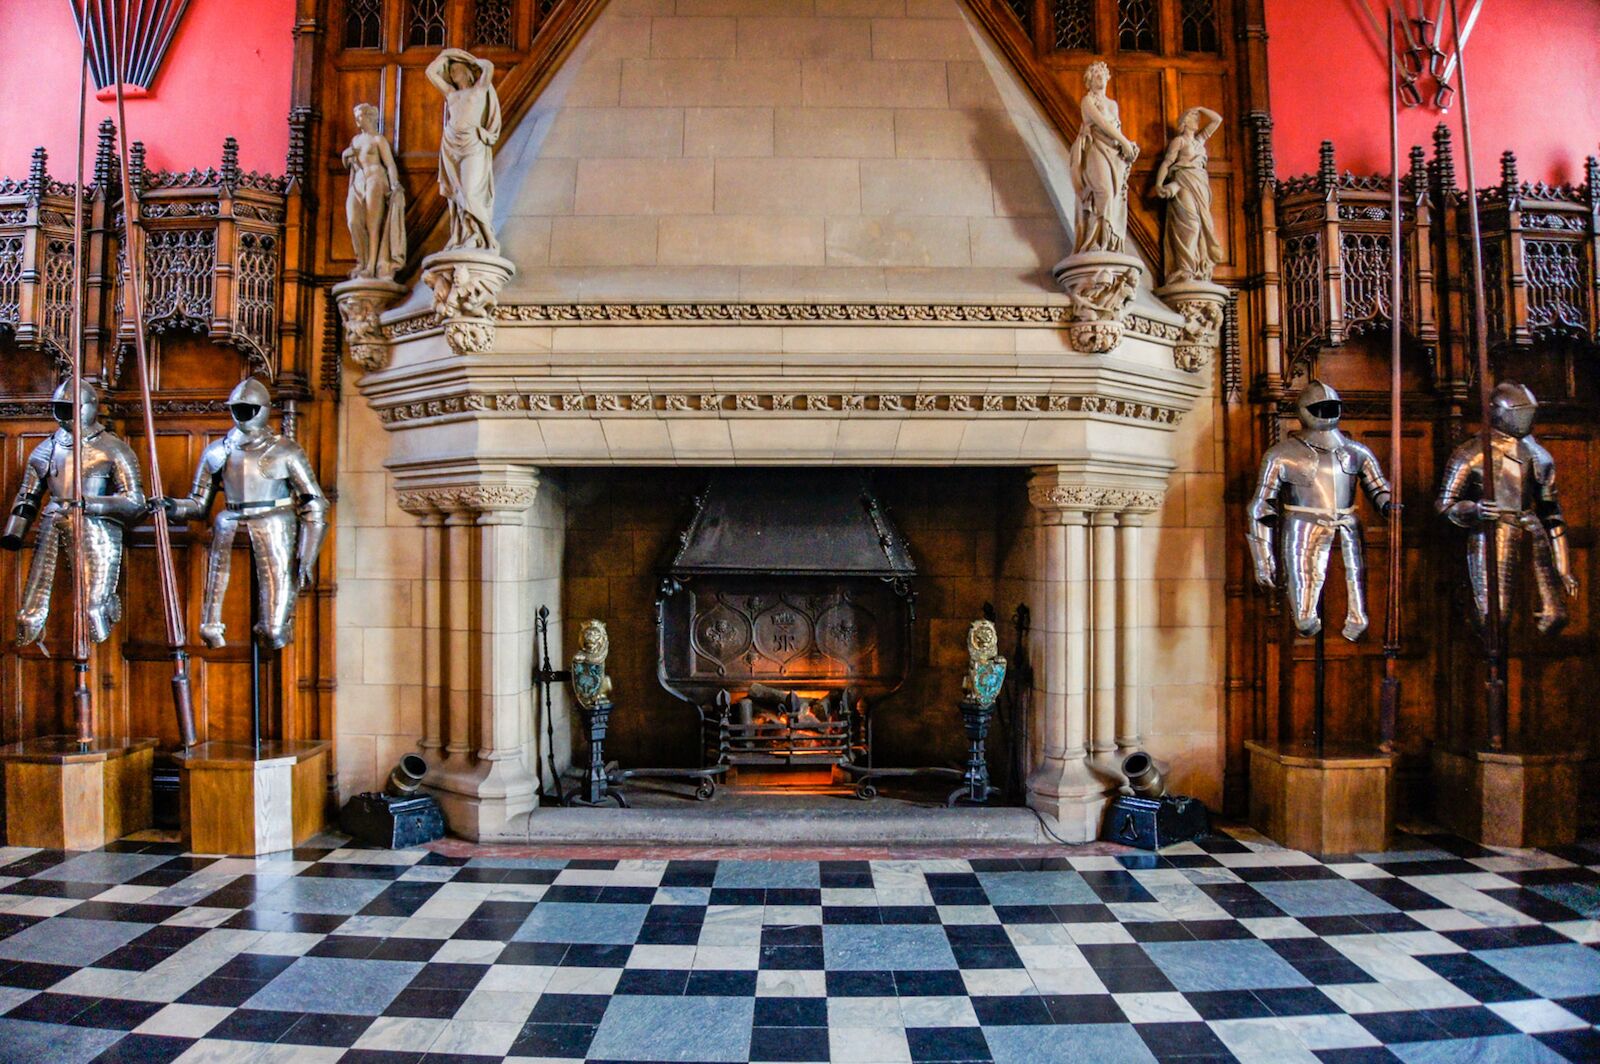 The Great Hall at Edinburgh Castle